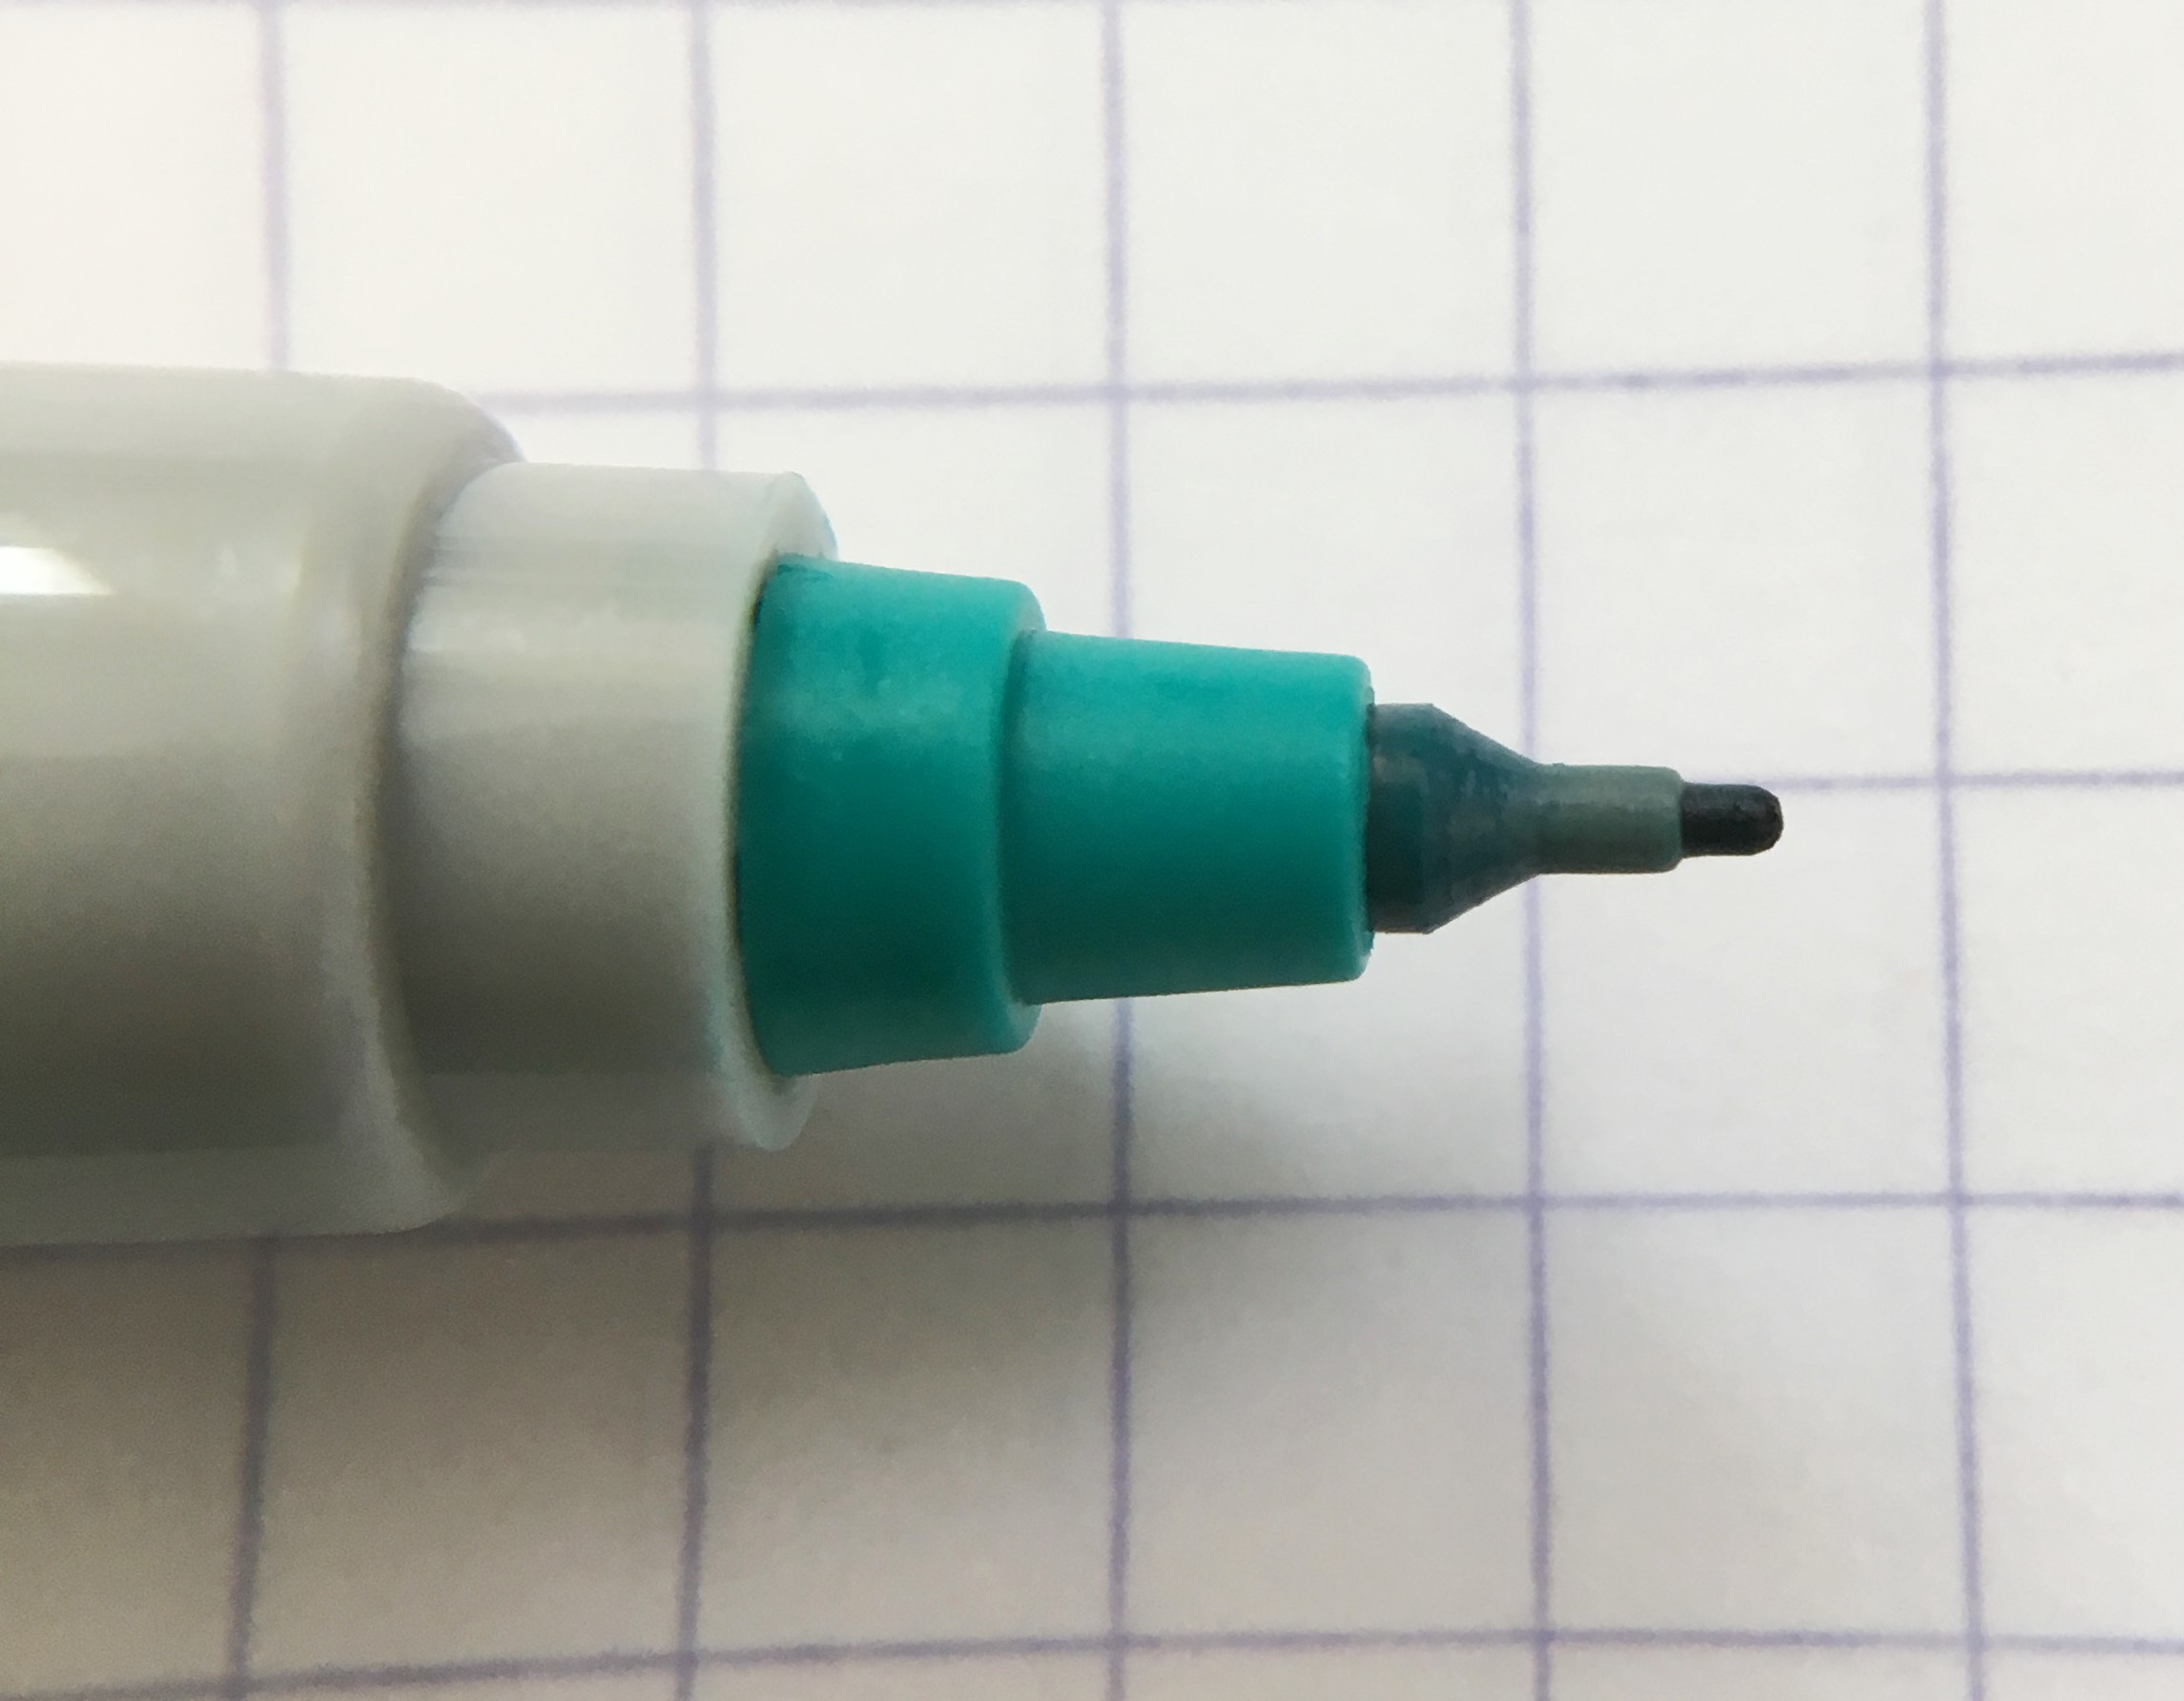 Sharpie Cosmic Color Permanent Marker Review — The Pen Addict